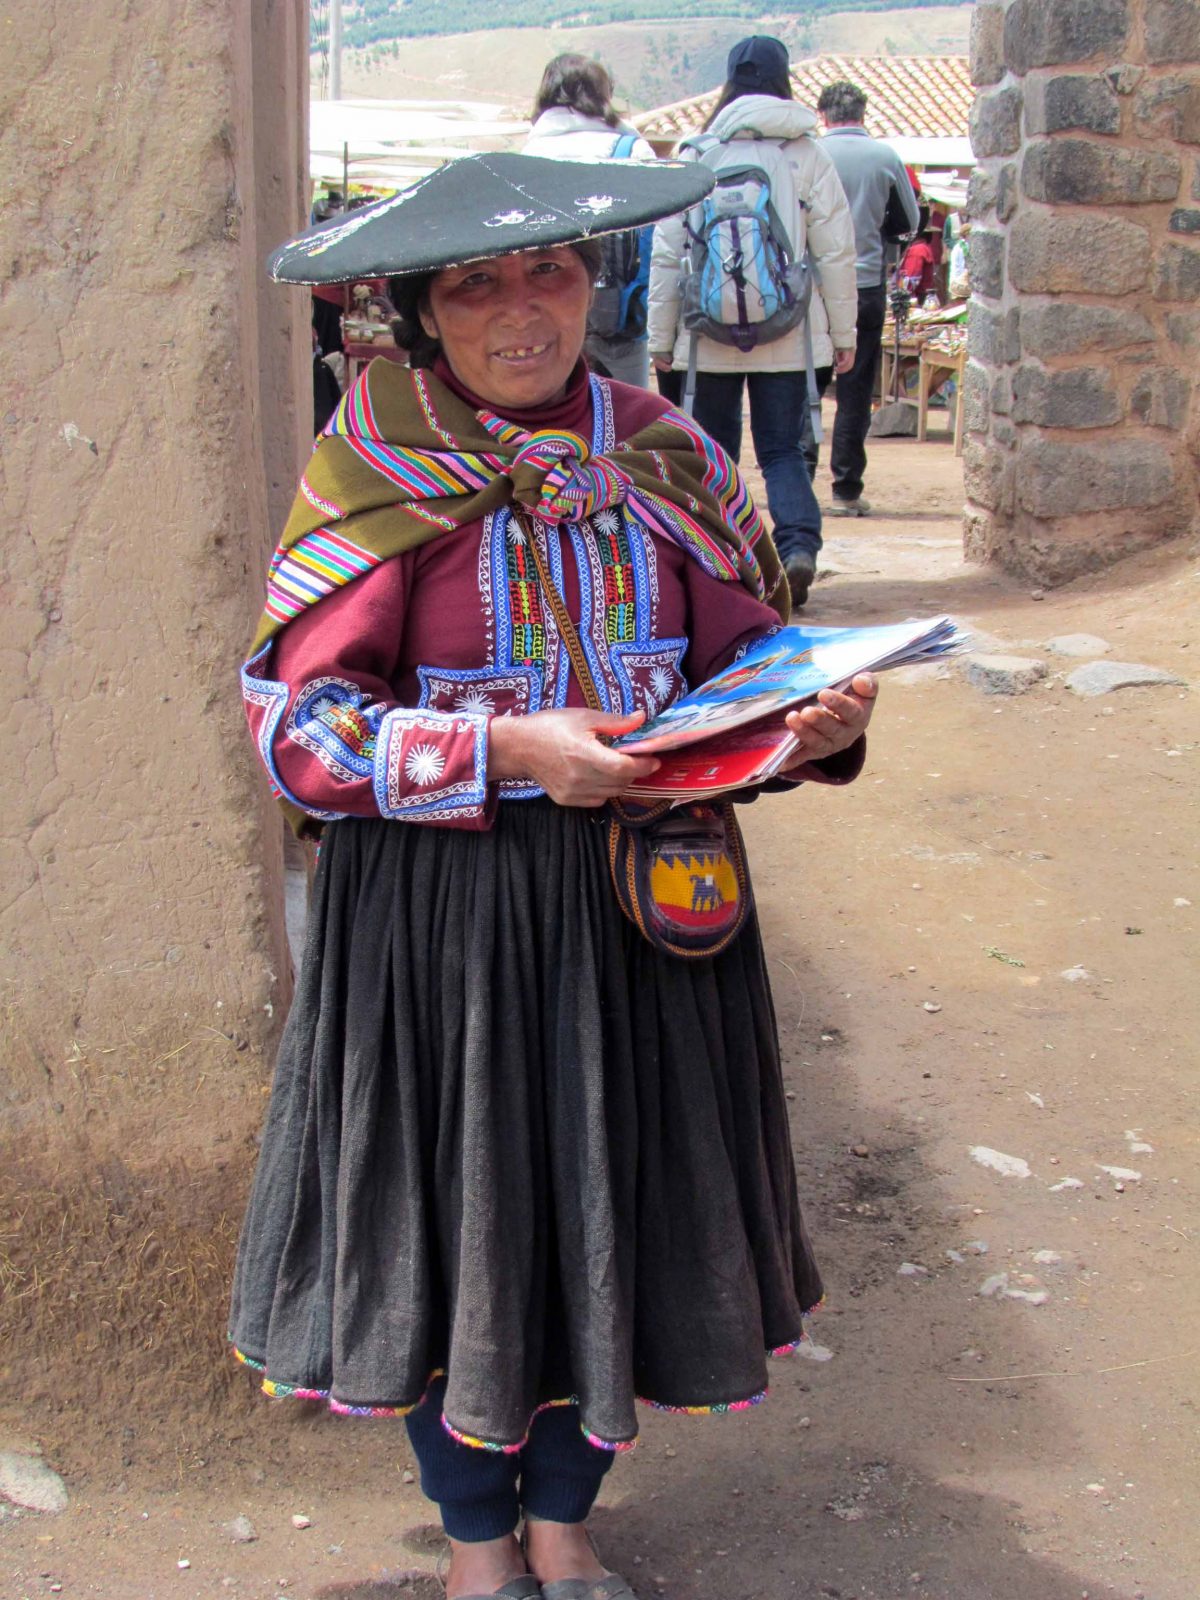 A local woman handing out tourist guides in Raqchi, Peru | ©Angela Drake